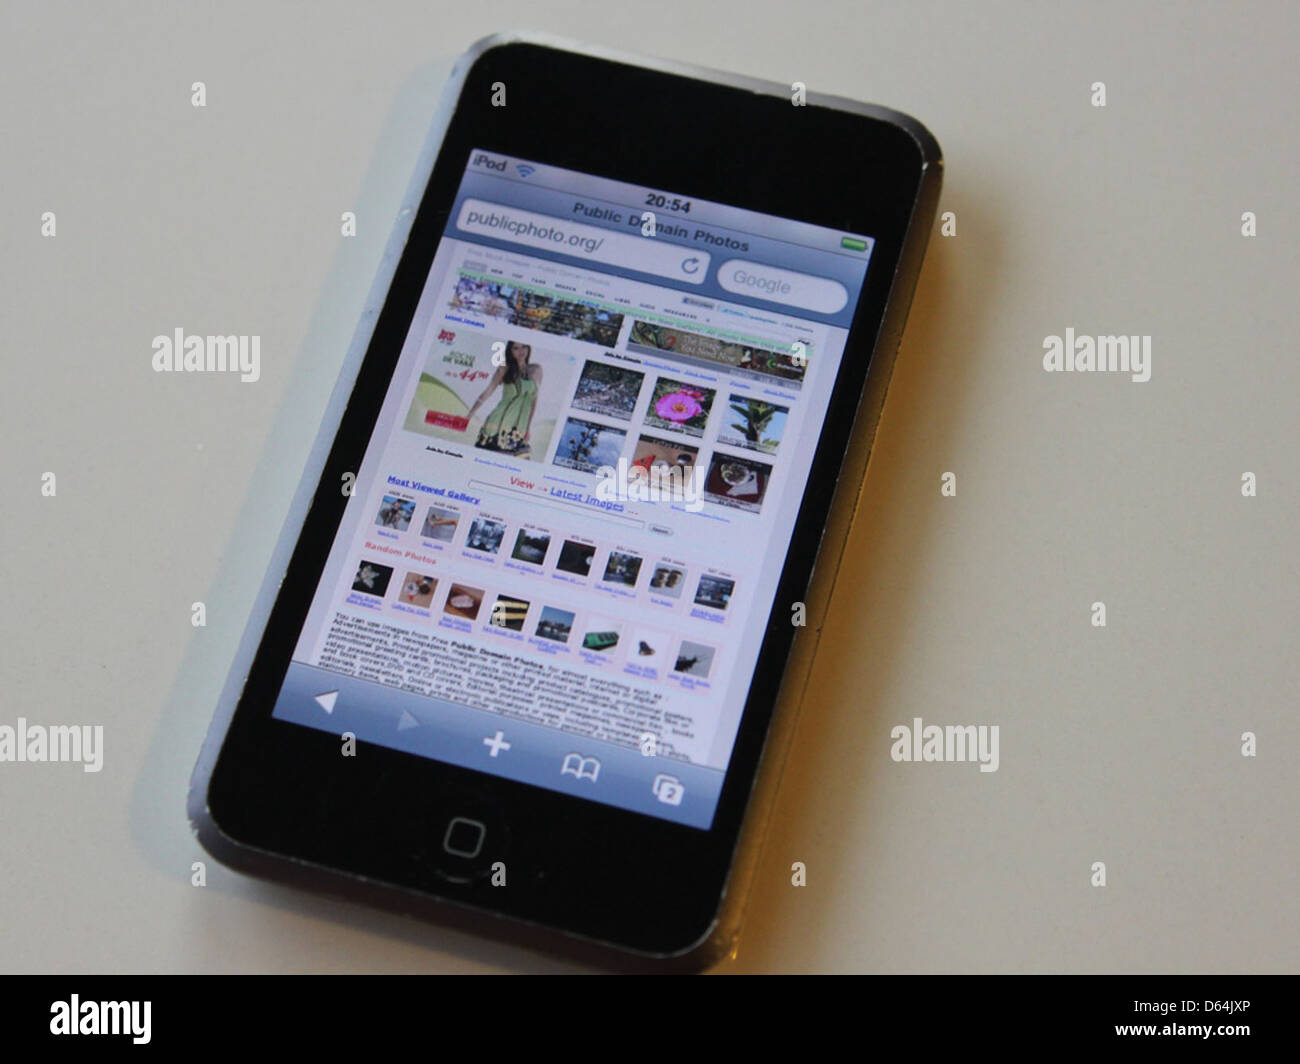 Apple-iPod-Touch-8Gb-Wi-Fi 634317 Stock Photo - Alamy